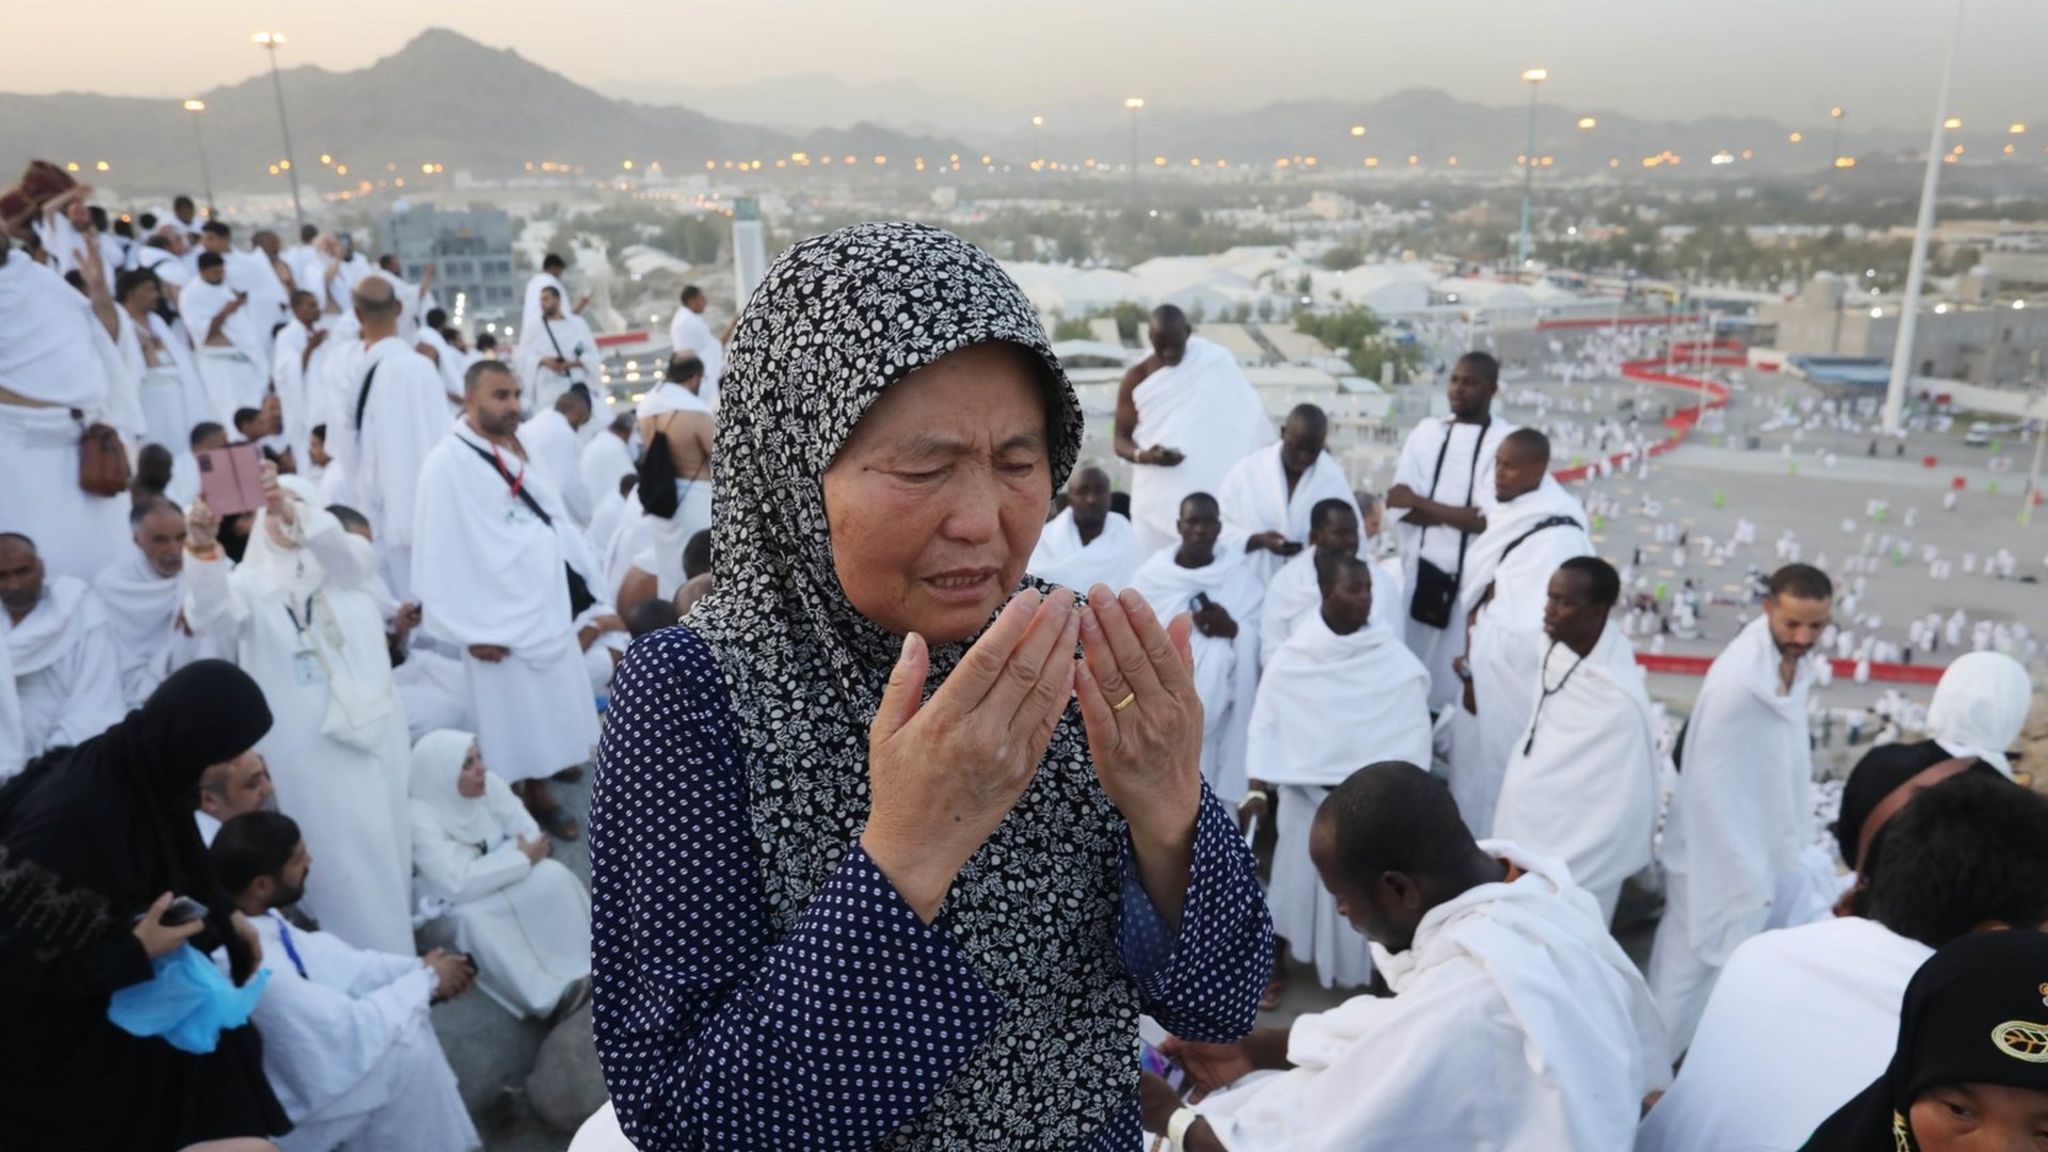 Hajj Price rises making pilgrimage increasingly unaffordable BBC News